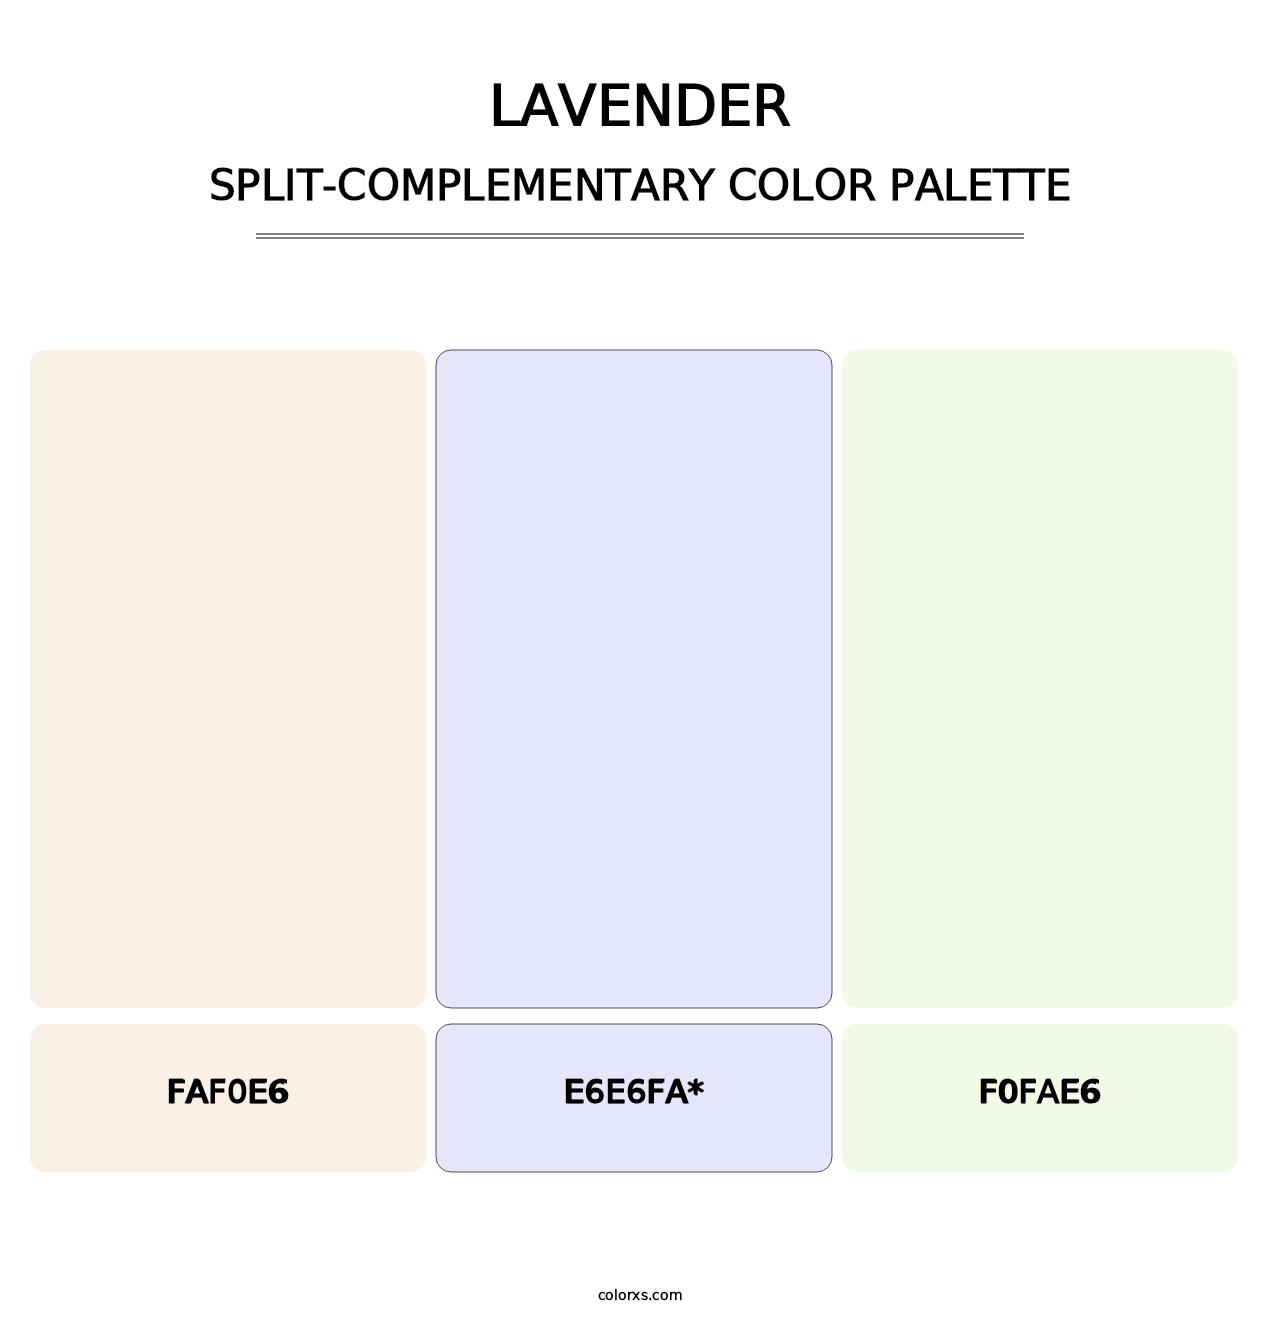 Lavender - Split-Complementary Color Palette